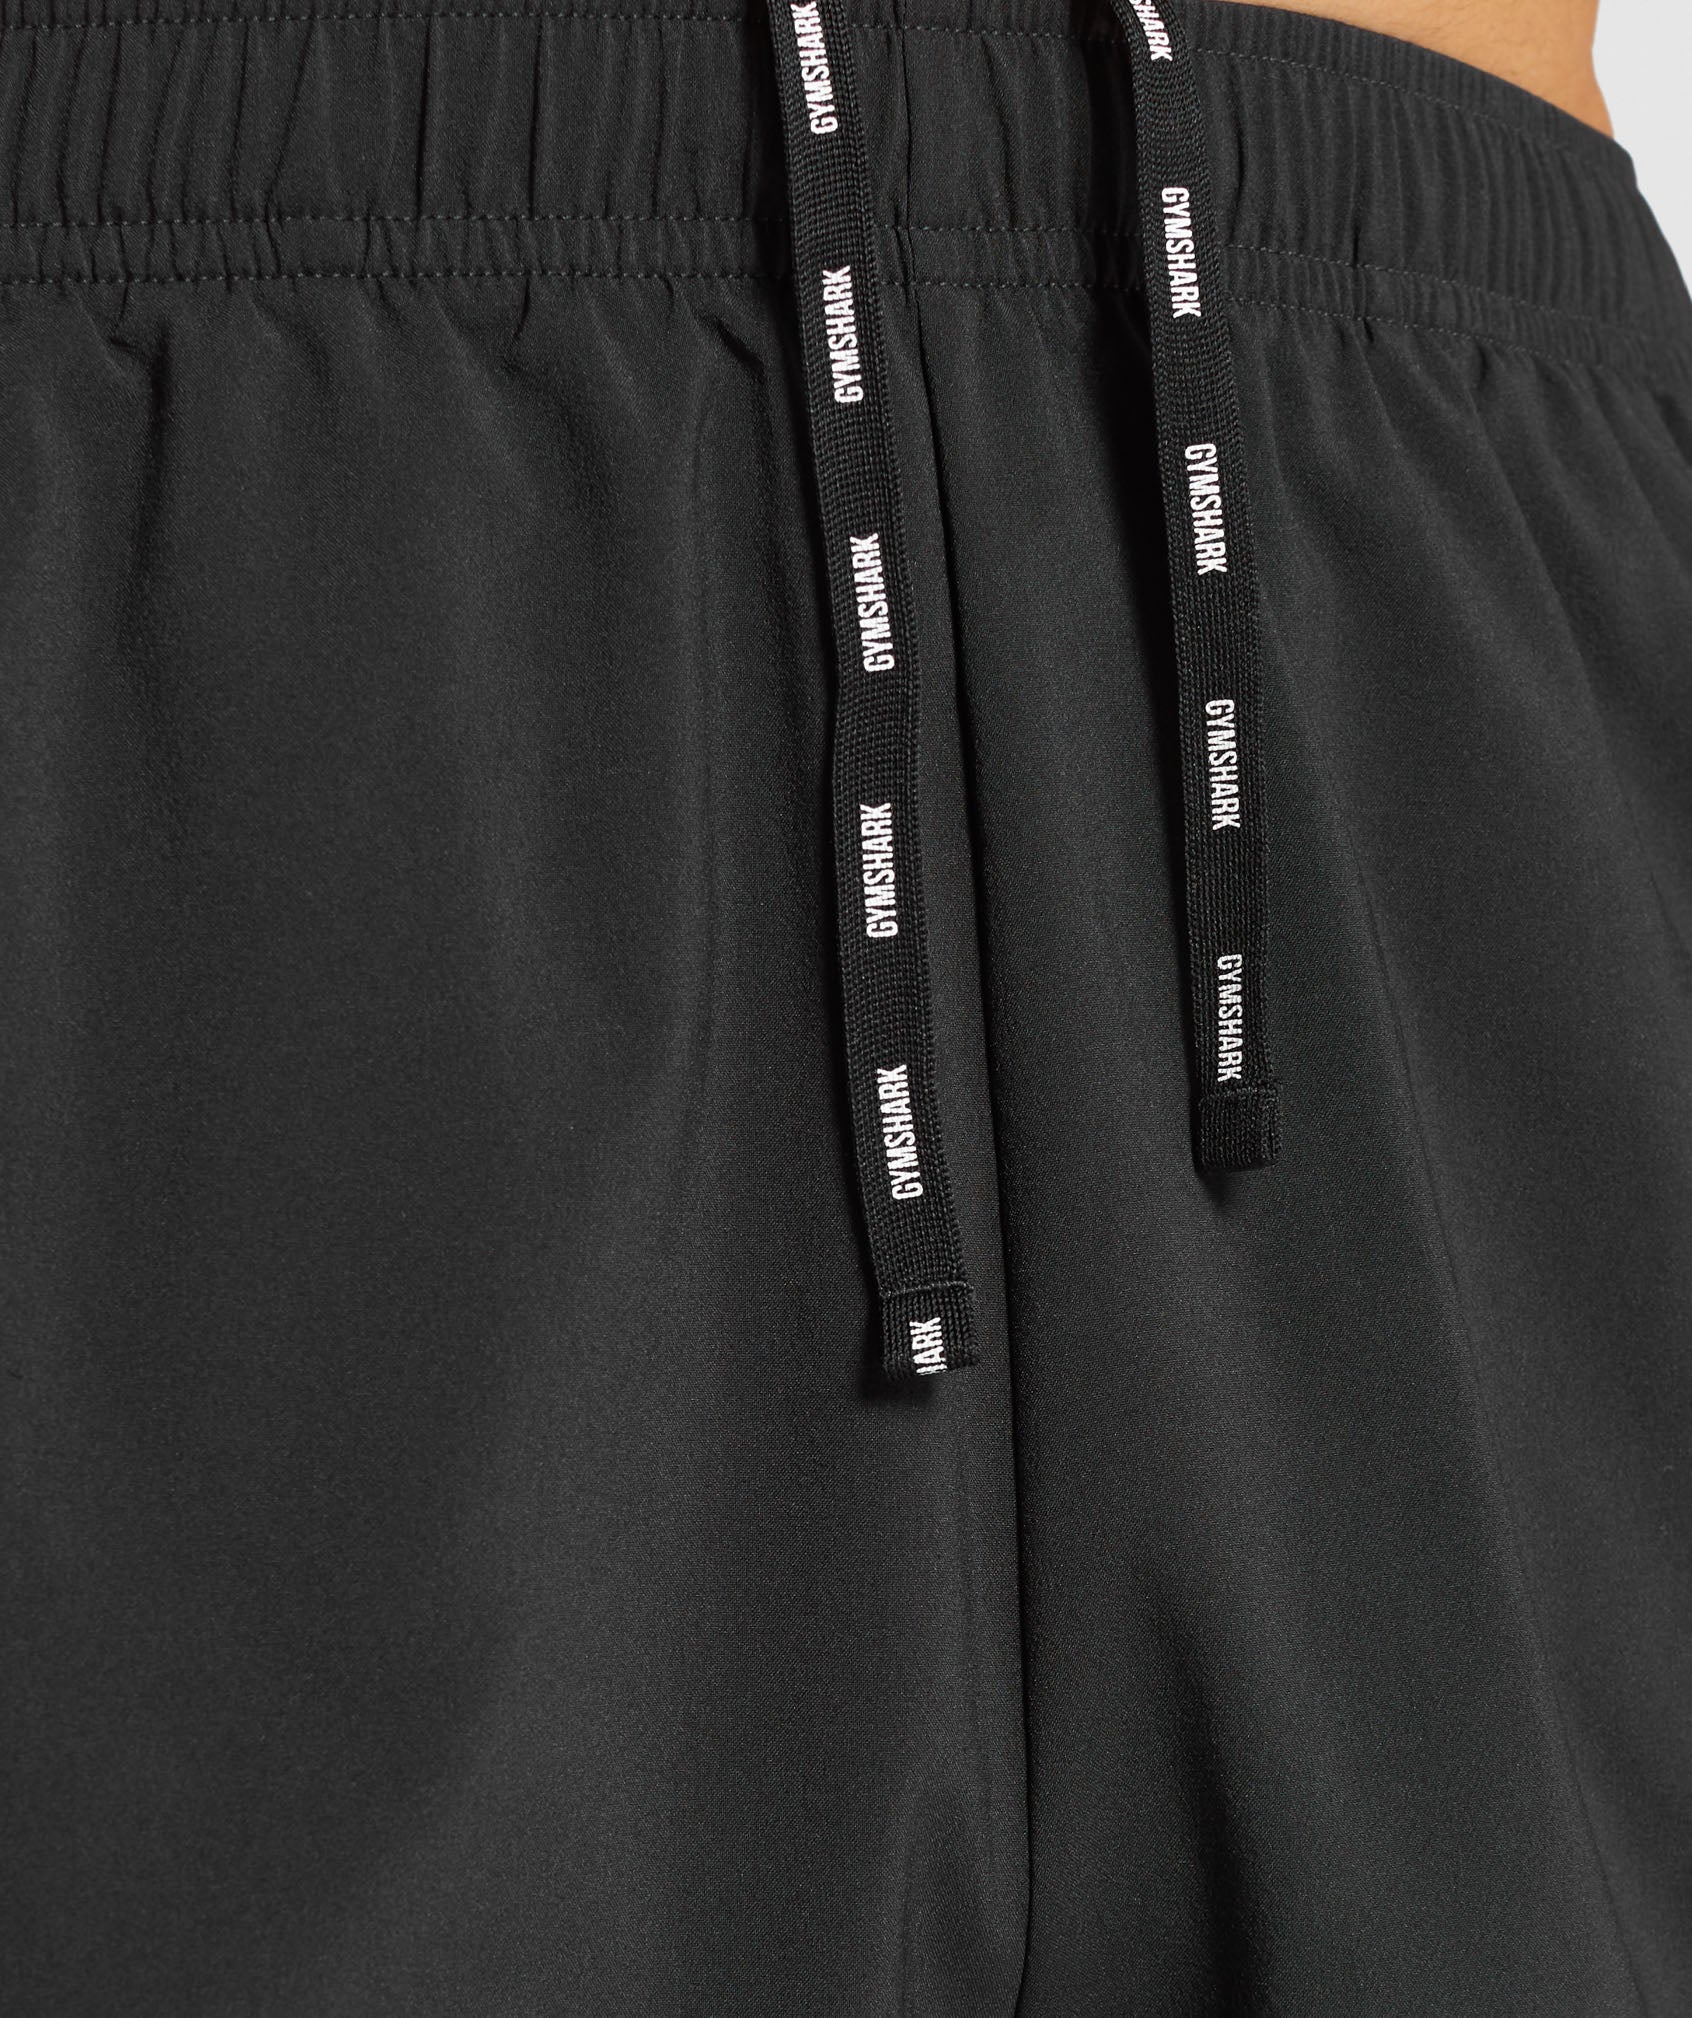 Arrival Zip Pocket Shorts in Black